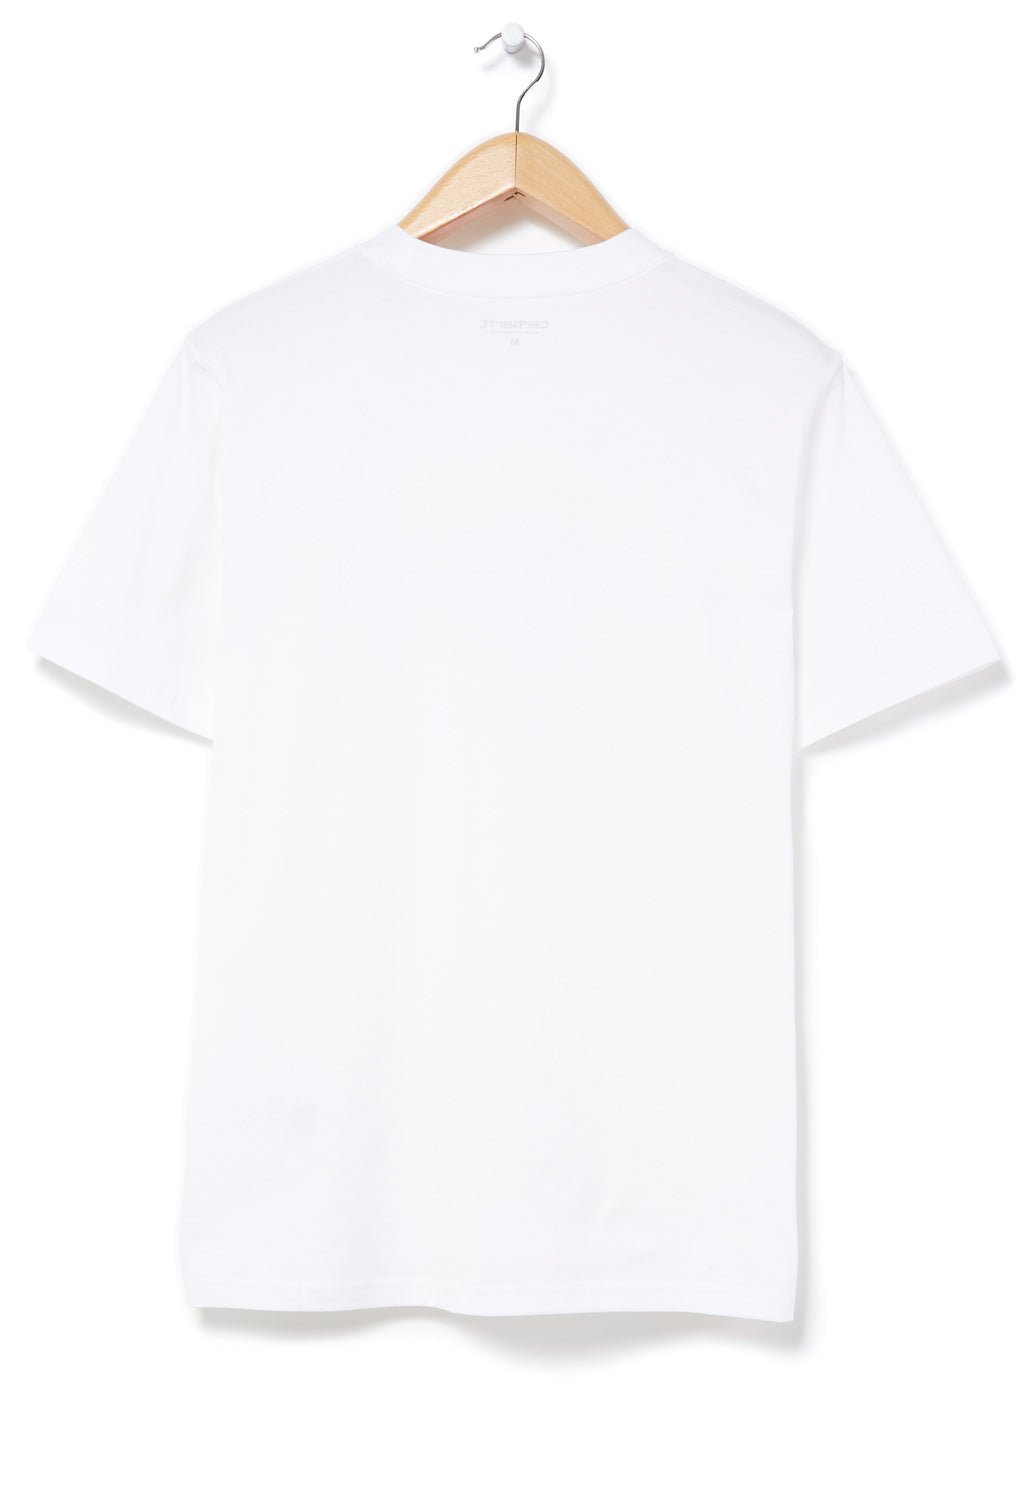 Carhartt WIP Men's Marlin T-Shirt - White